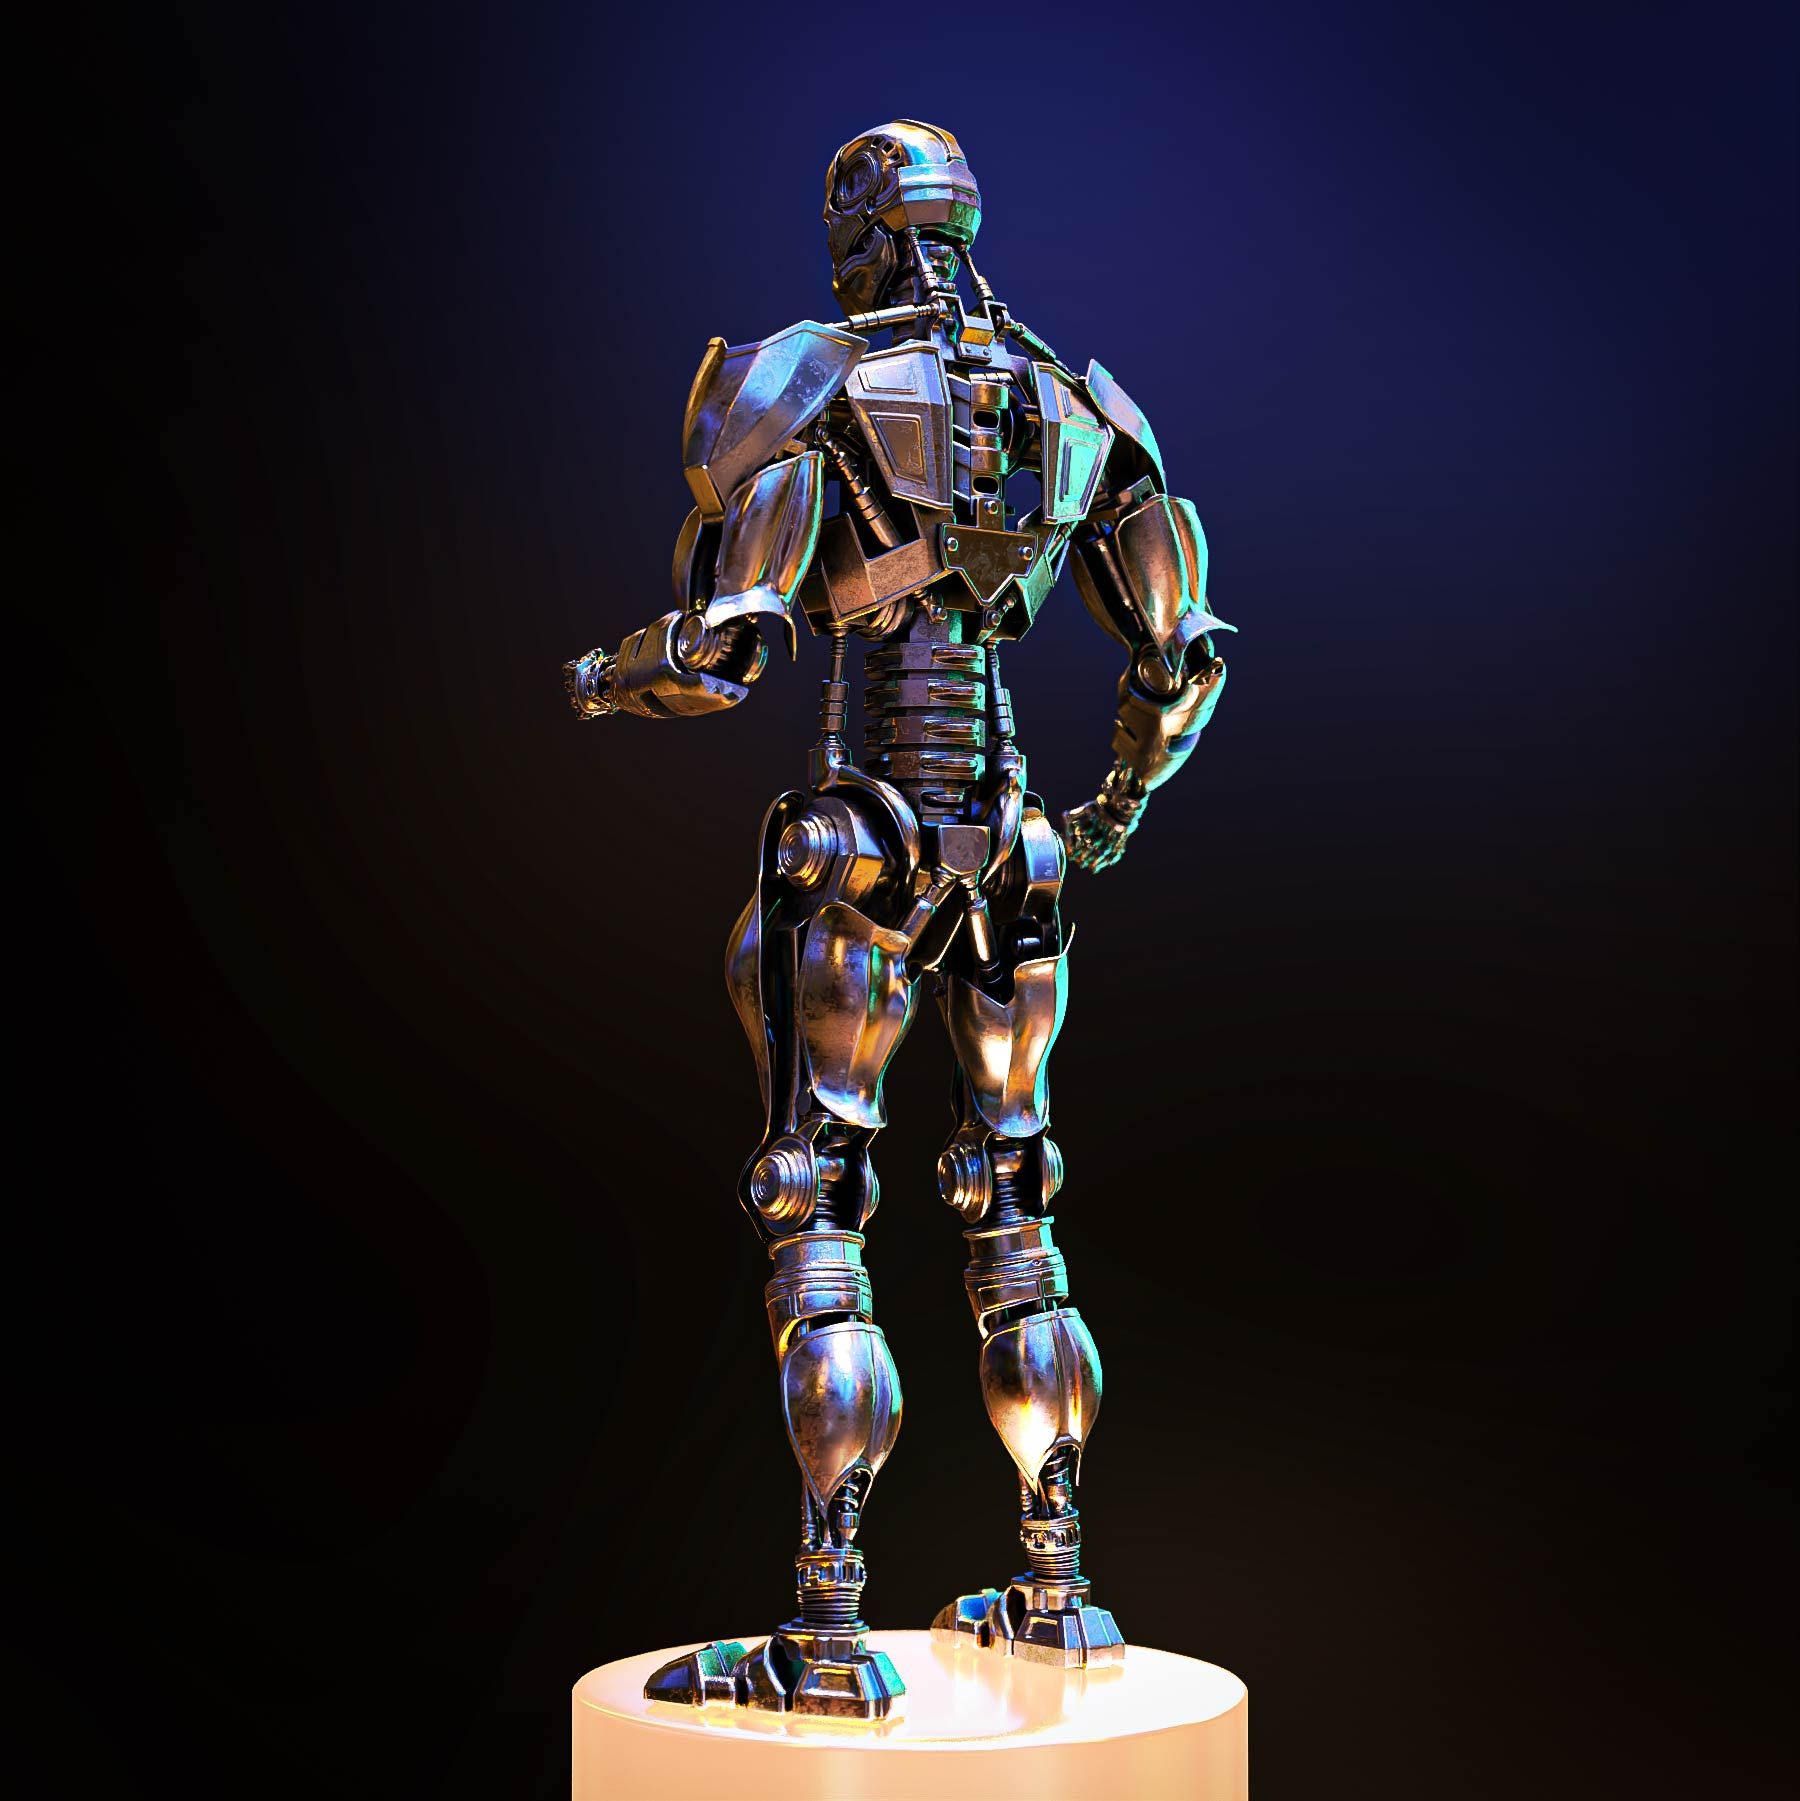 Rigged-Terminator-3D-Model-Futuristic-Cybernetic-Exoskeleton-rendering